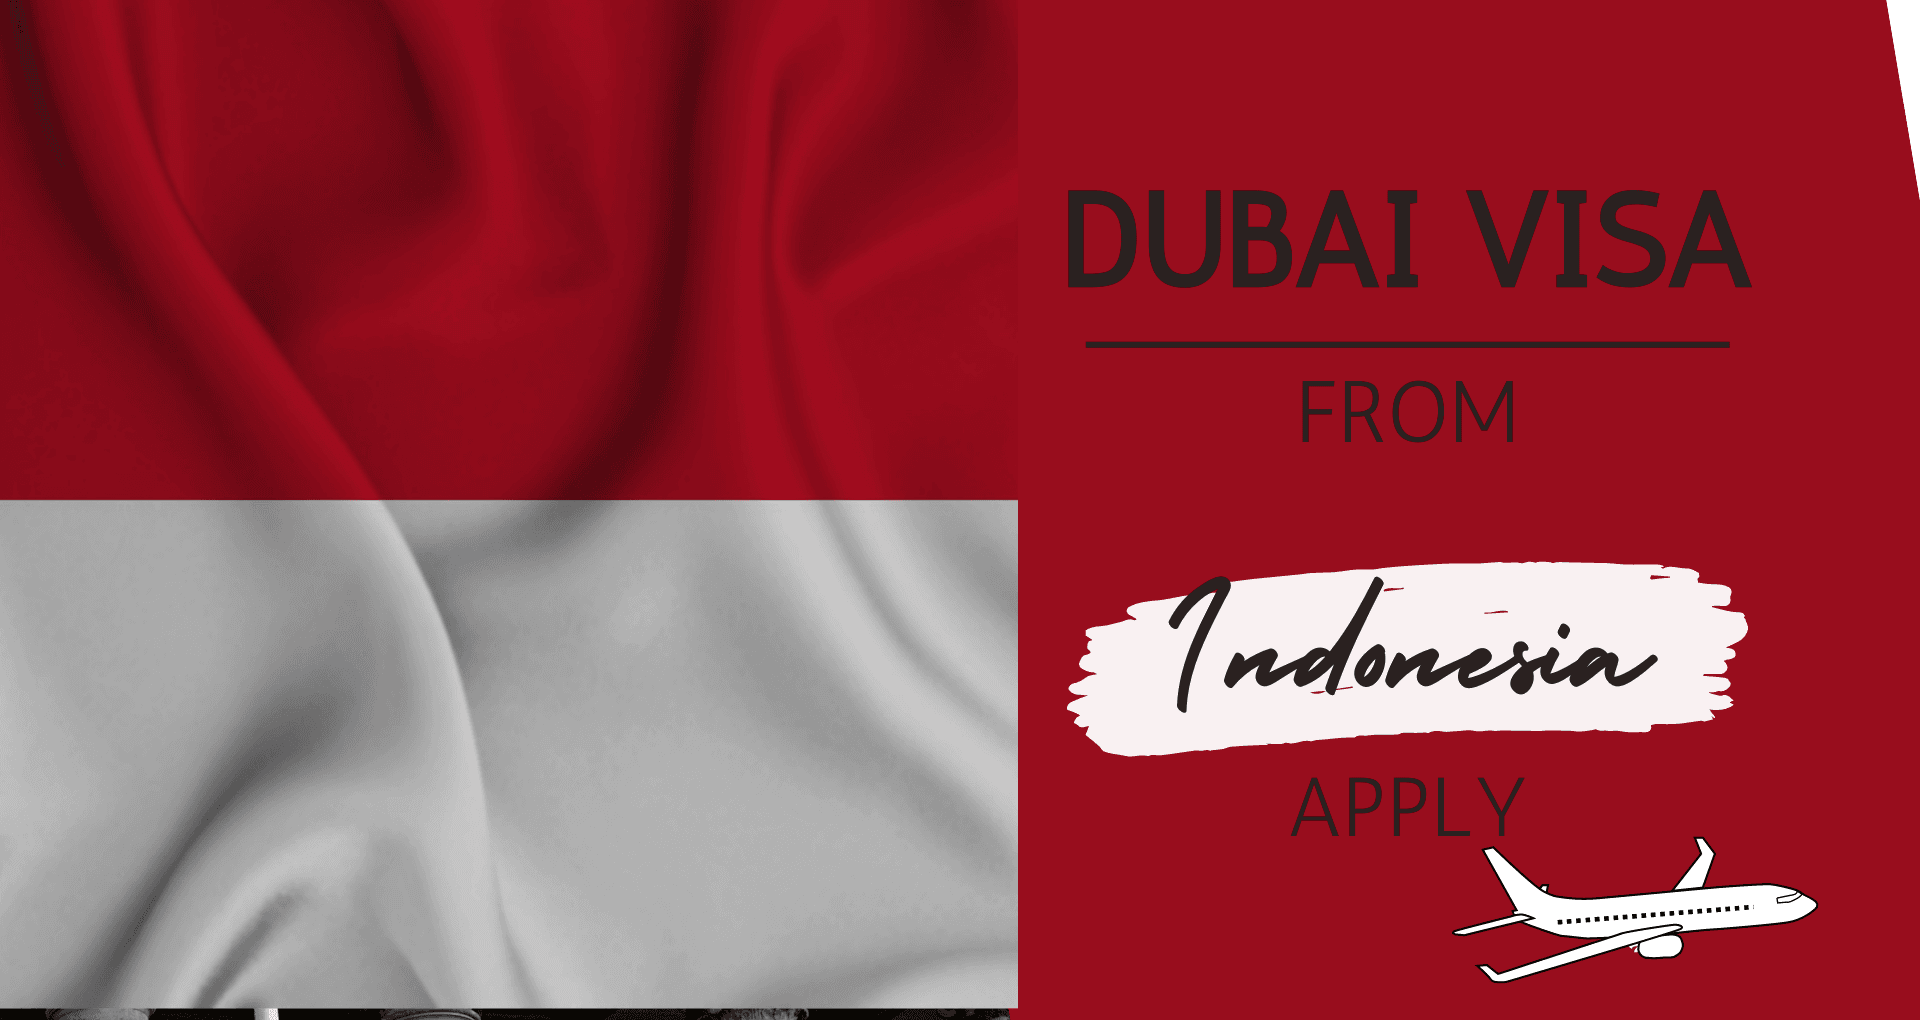 Dubai visa for Indonesian